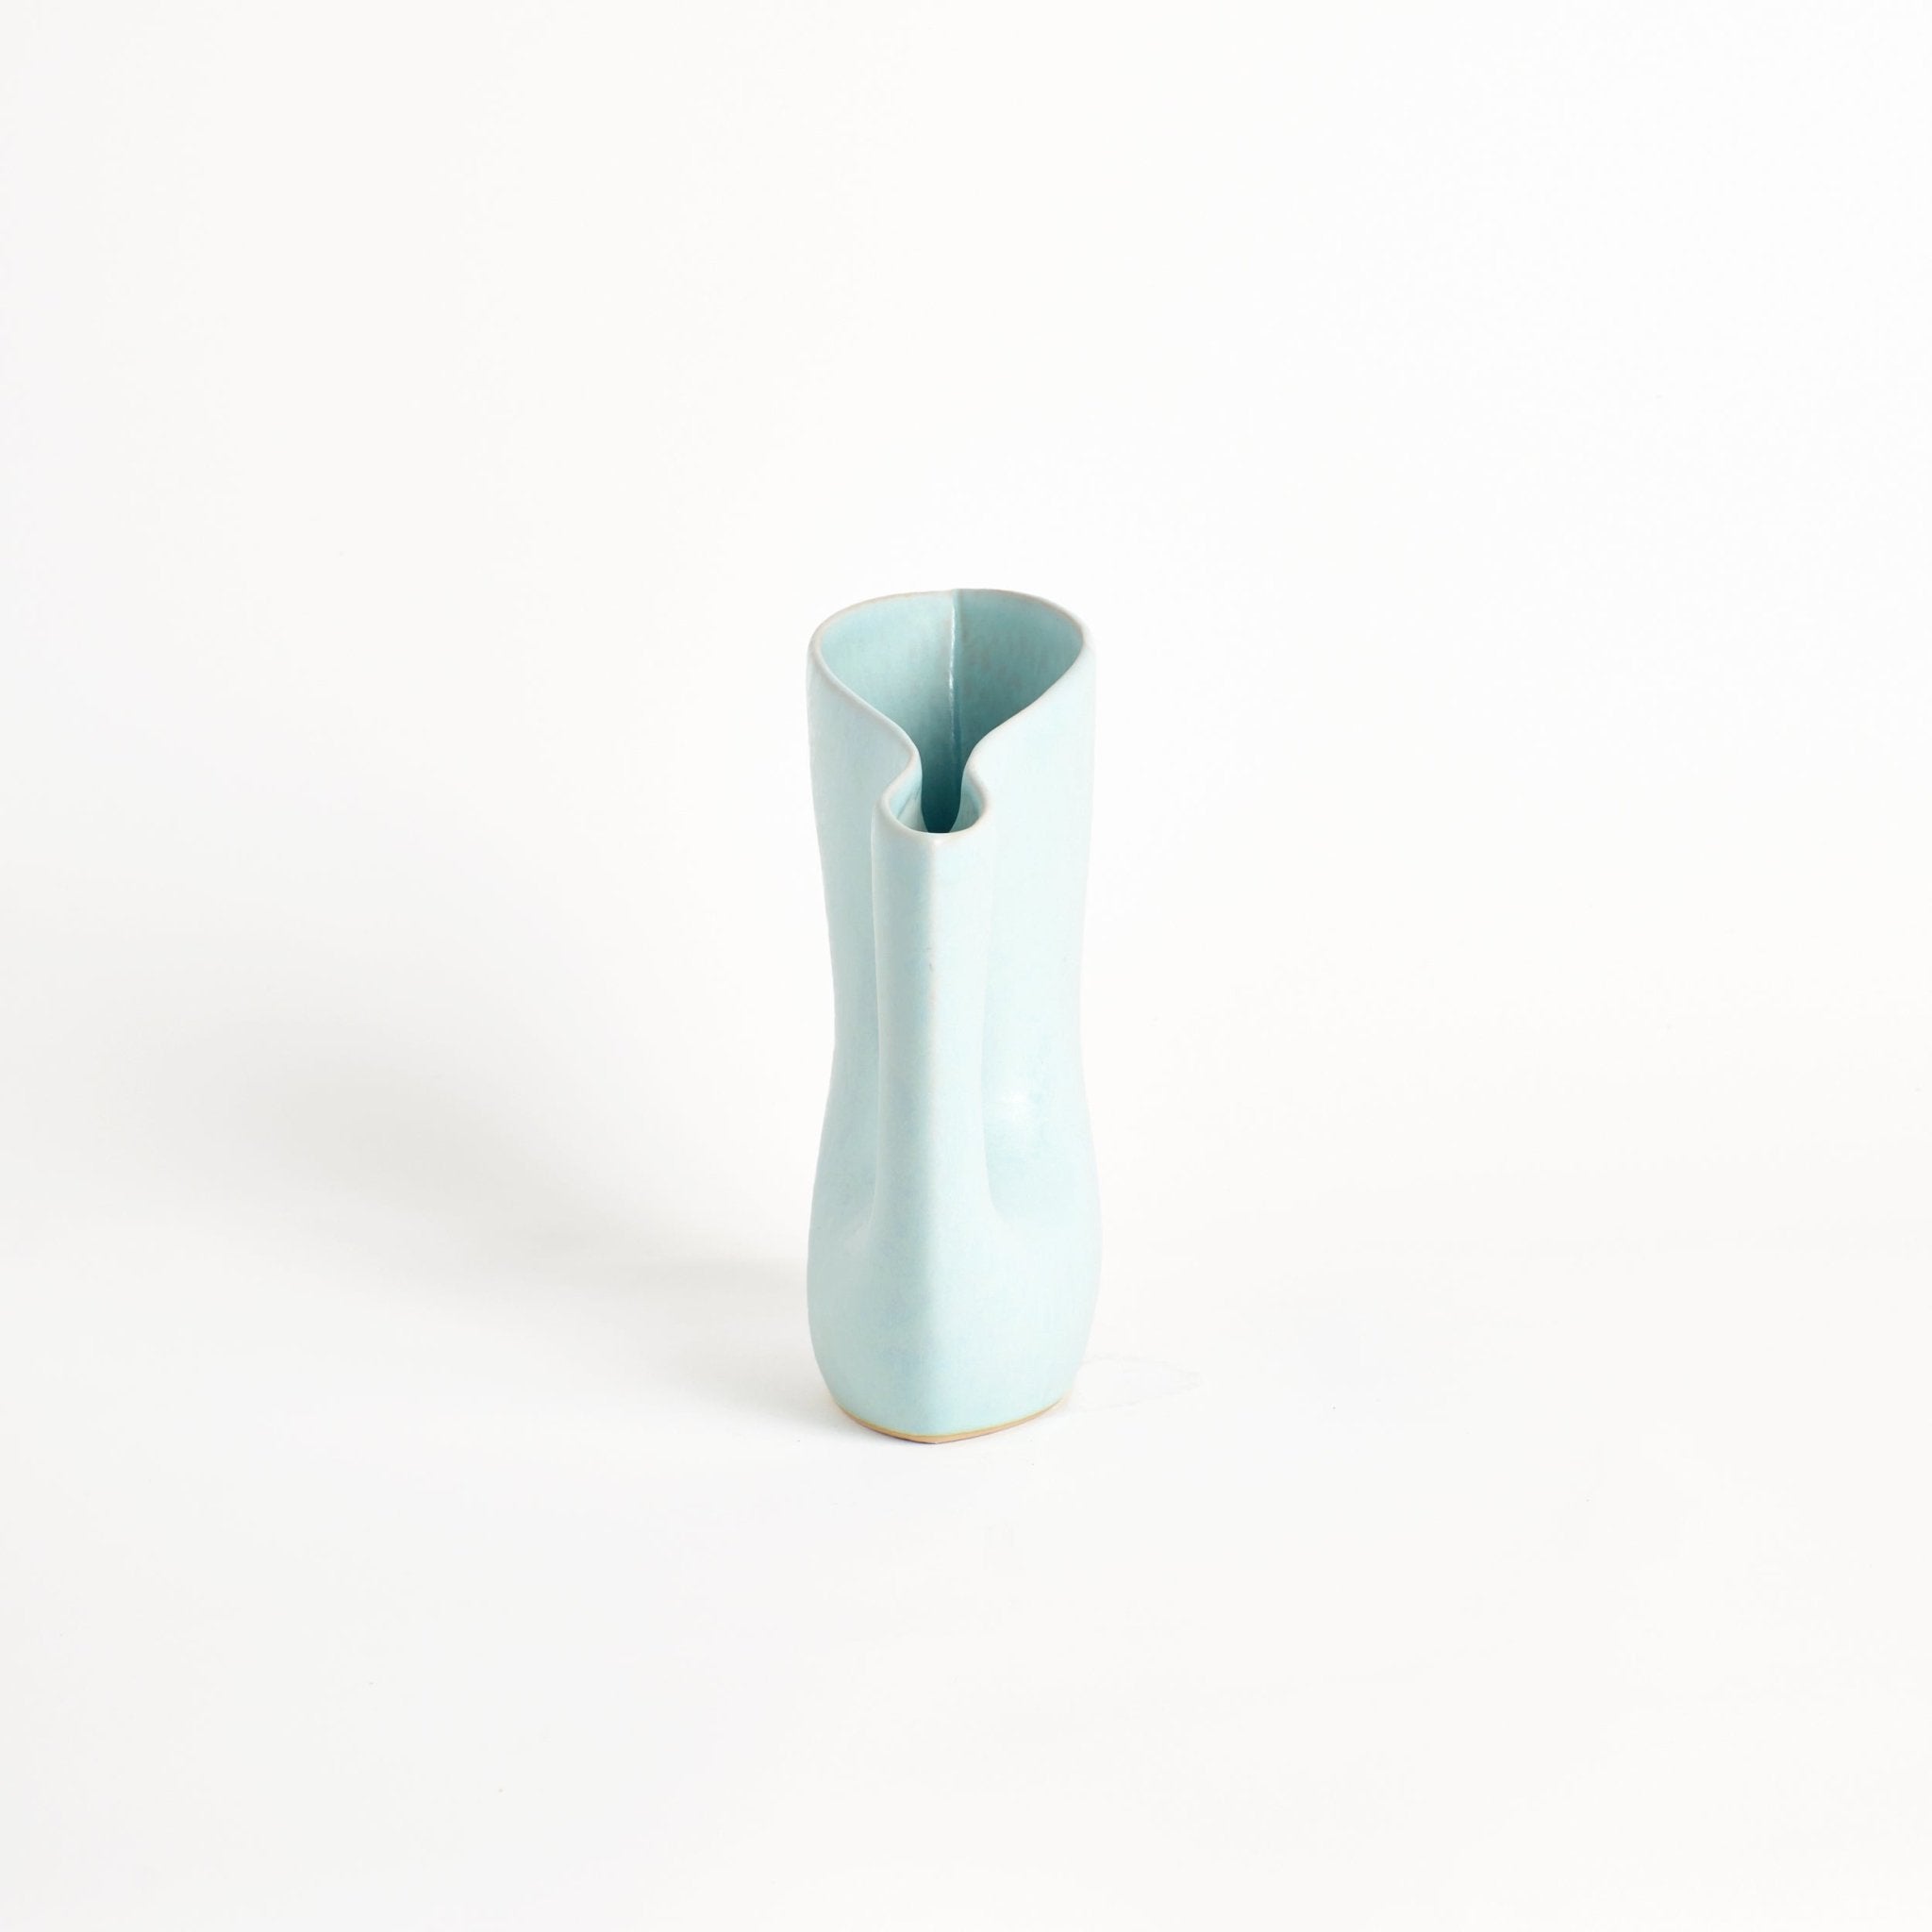 Mamasita Jug - Hellblau Vase von Project 213A